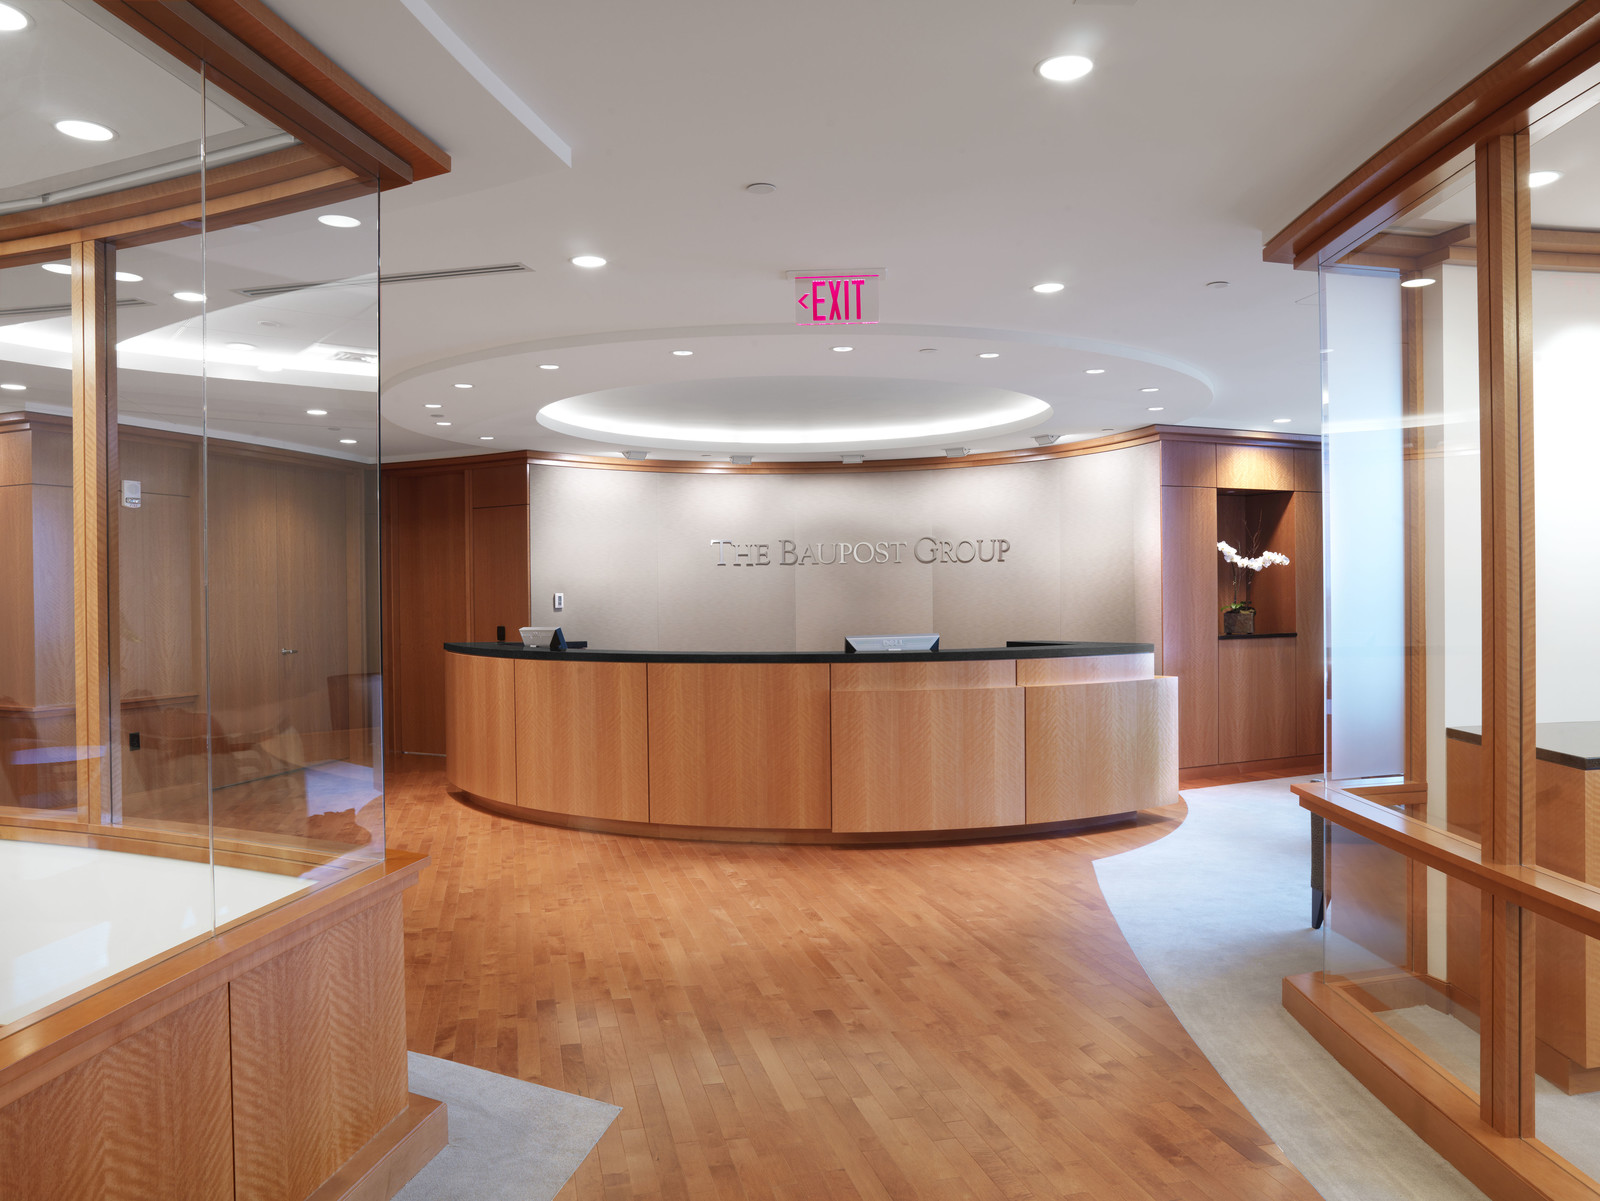 Custom trim, wall panels and recption desk enhance this elegant space